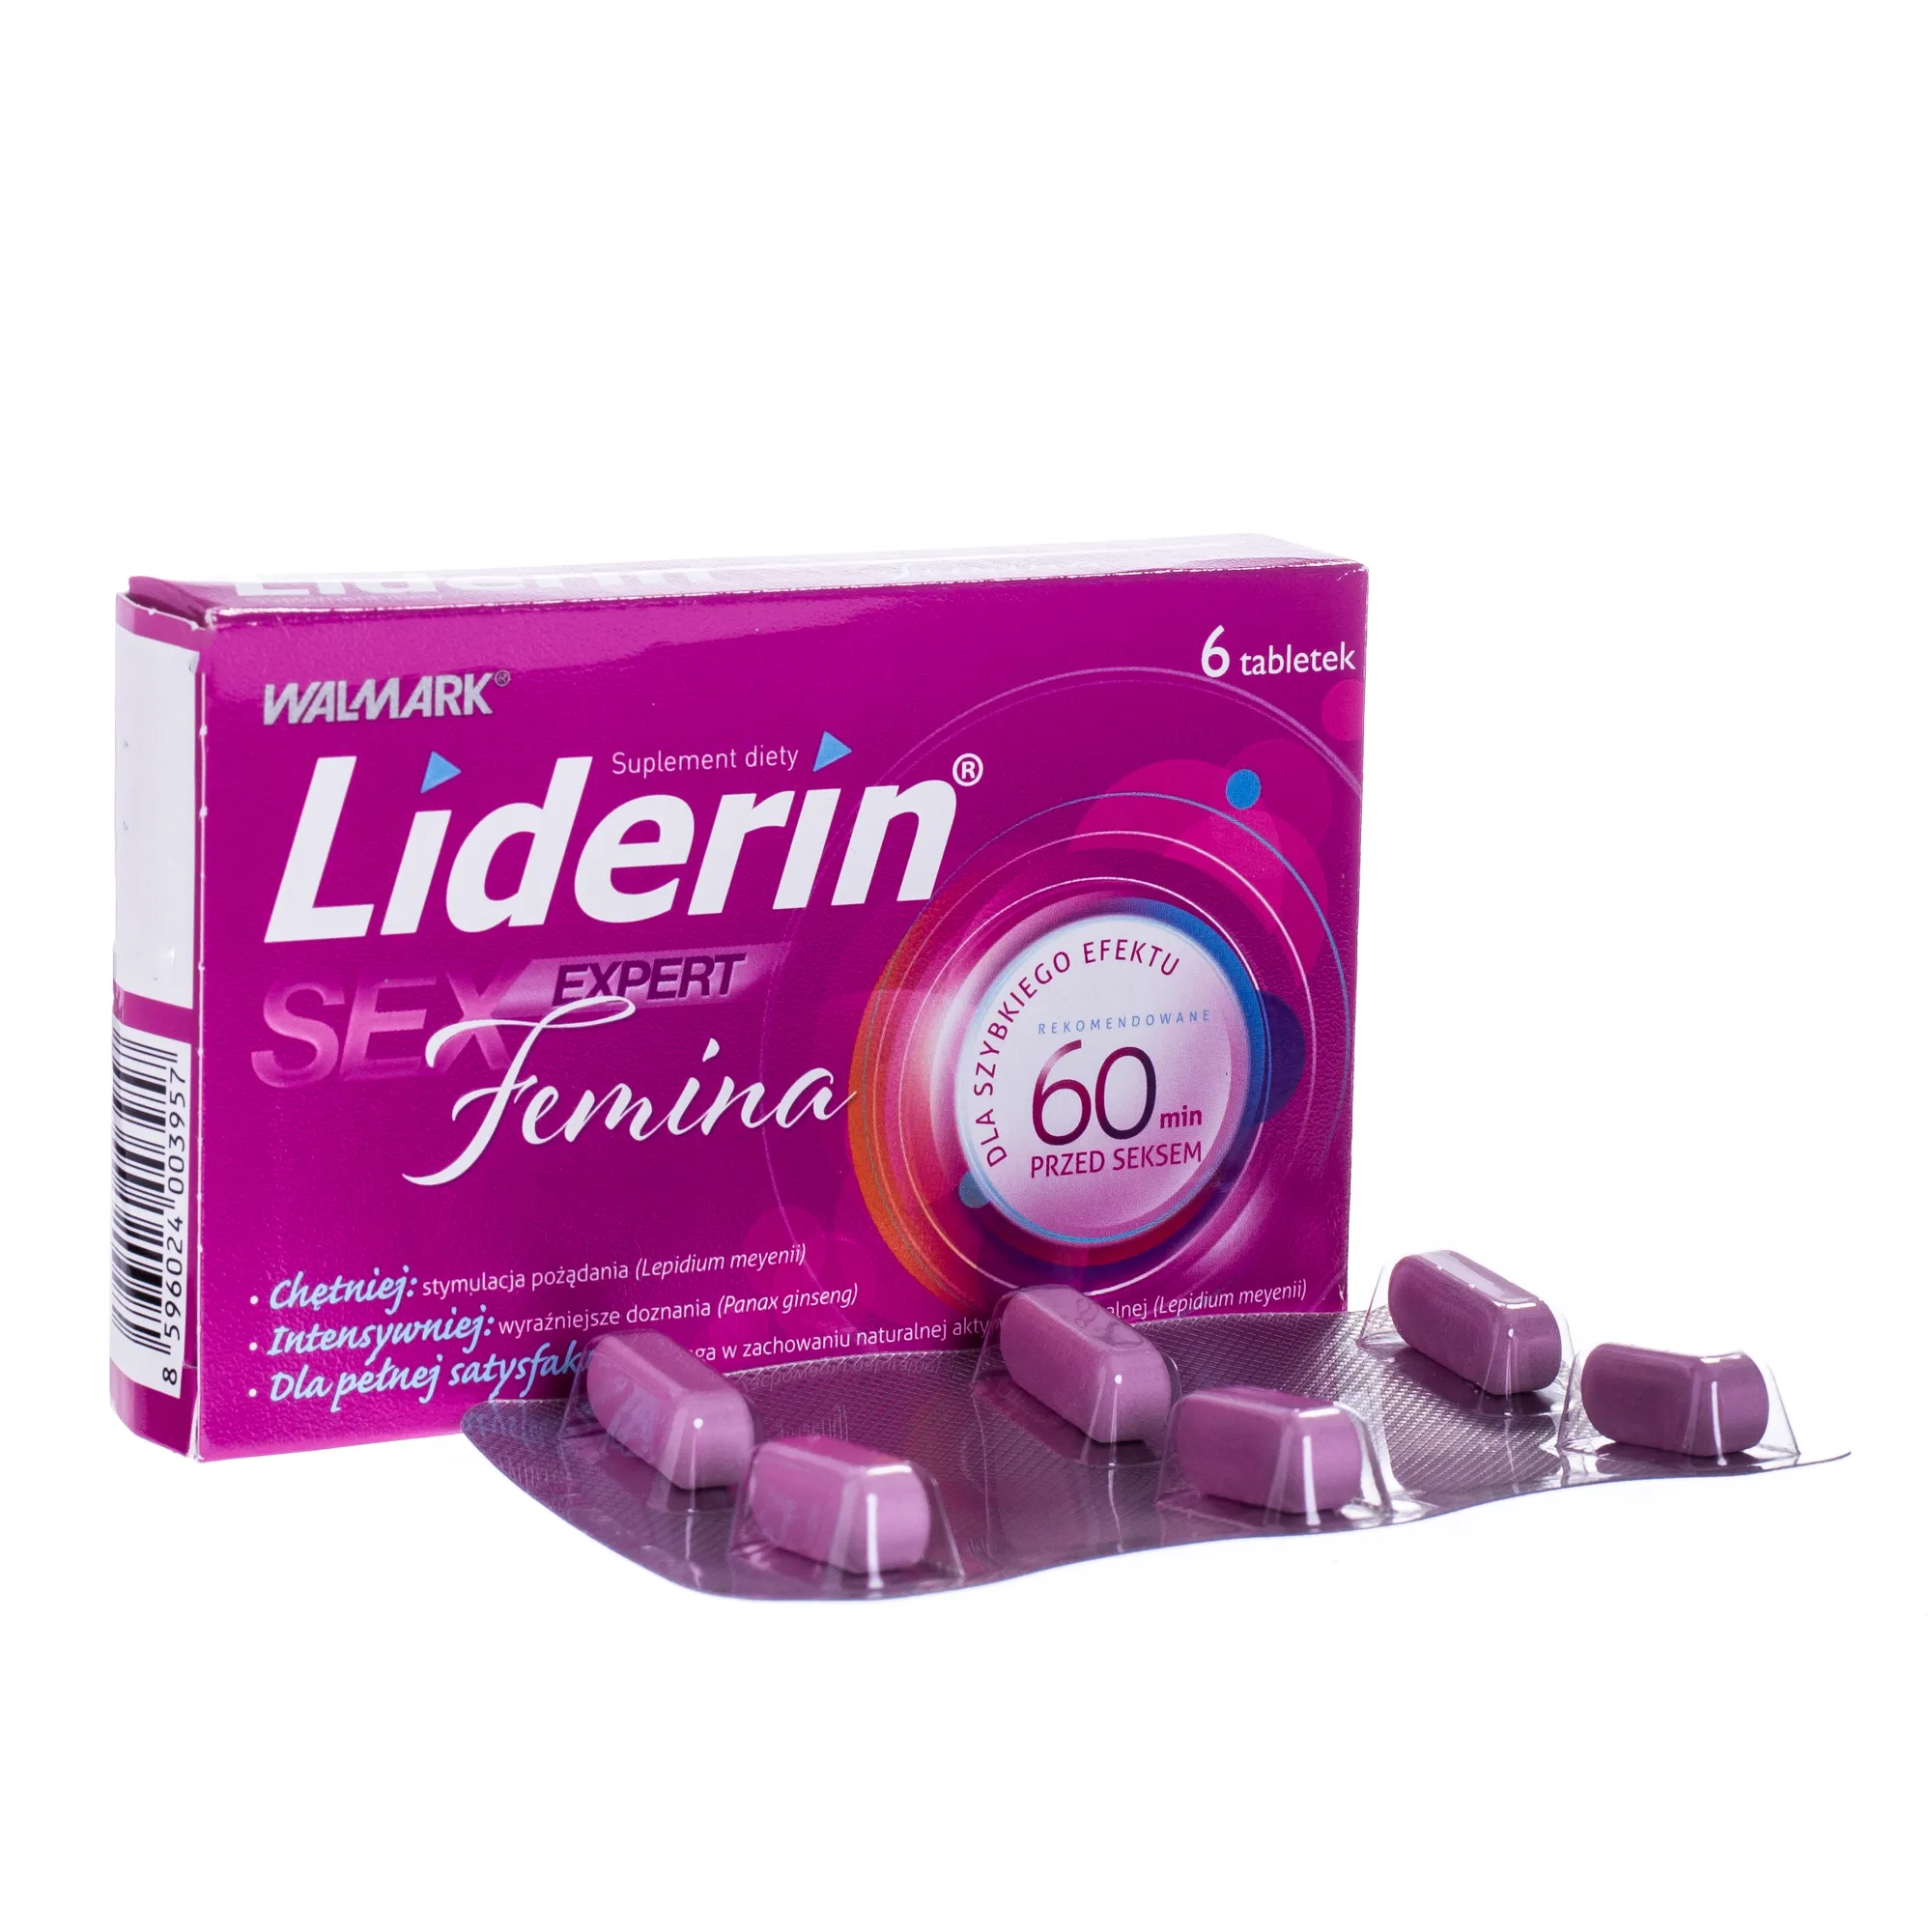 Liderin Sex Expert Femina, suplement diety, 6 tabletek